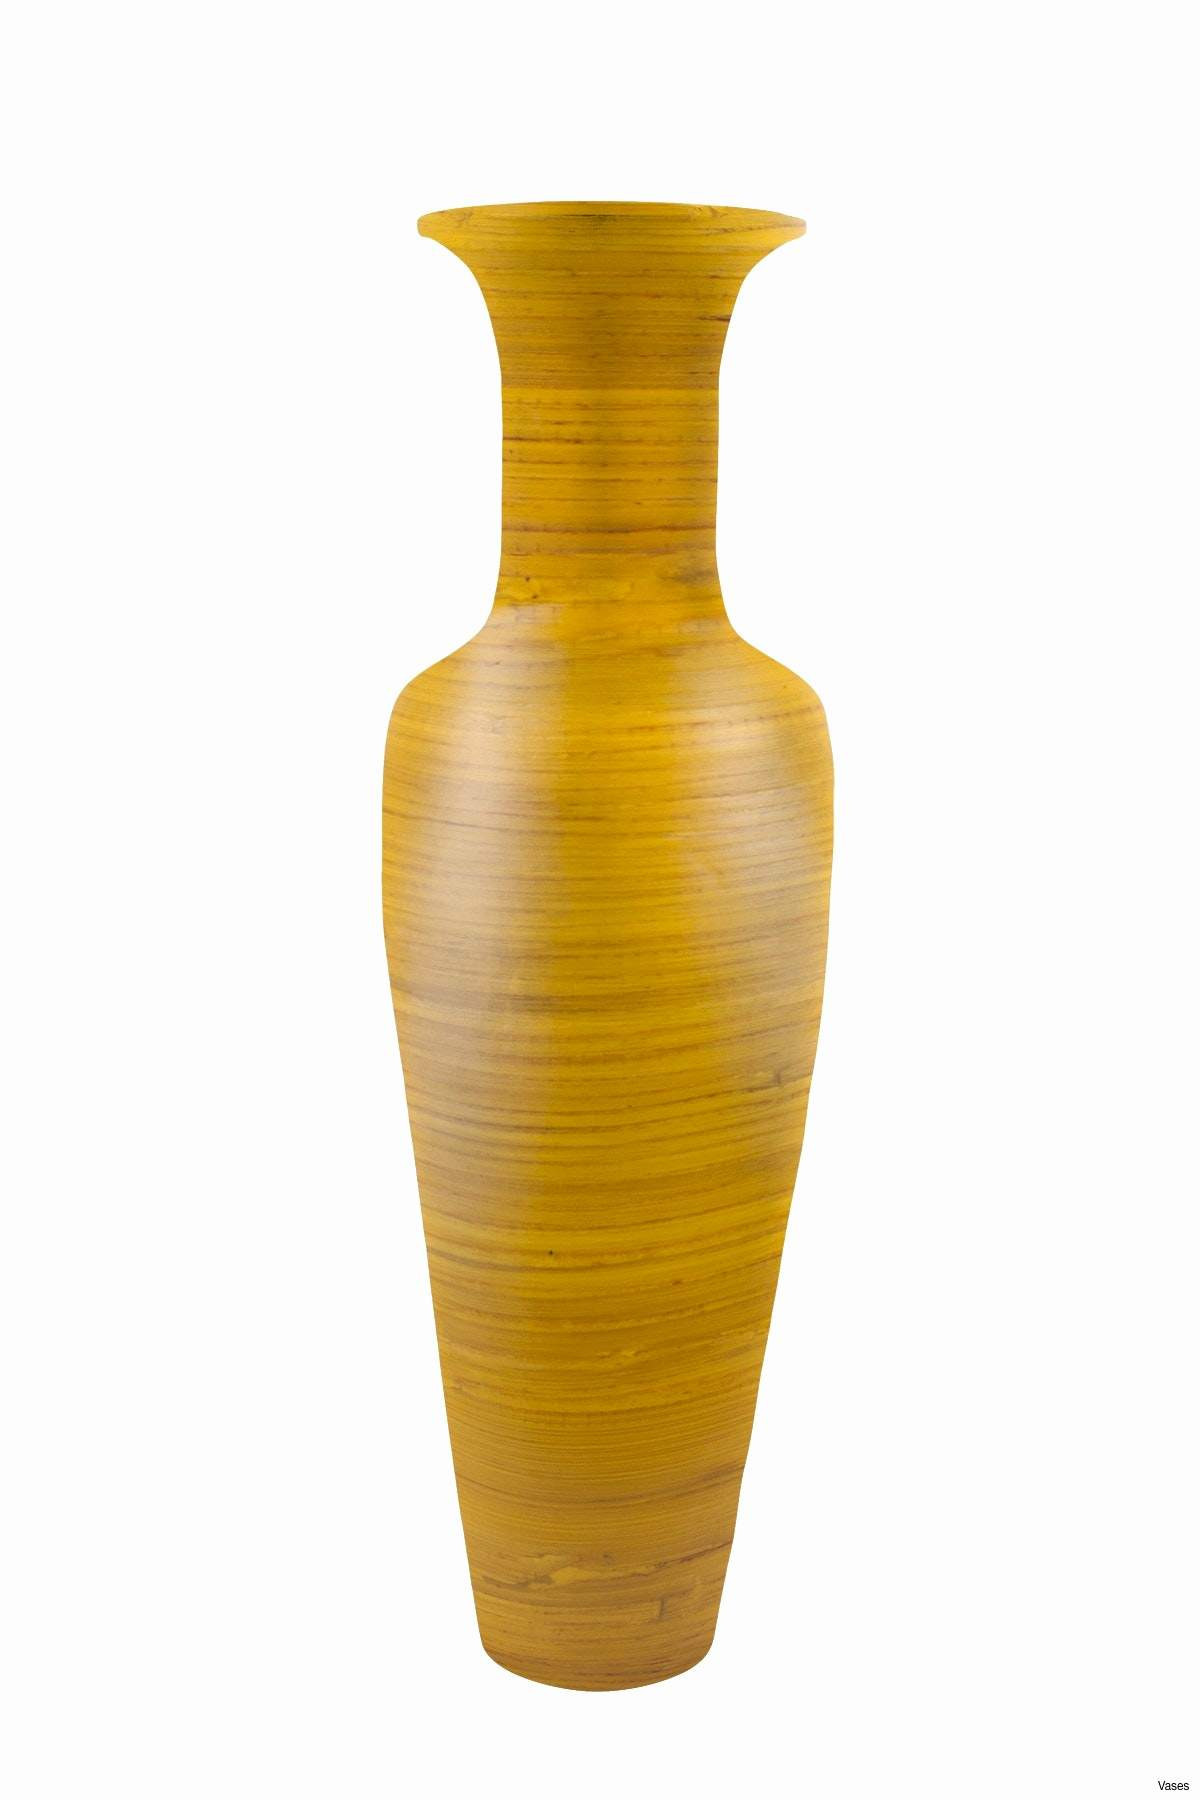 12 Best Teal Ceramic Vase 2024 free download teal ceramic vase of floor vase set of 3 collection area floor rugs new joaquin gray within area floor rugs new joaquin gray vases set 3 2h pottery floor i 0d